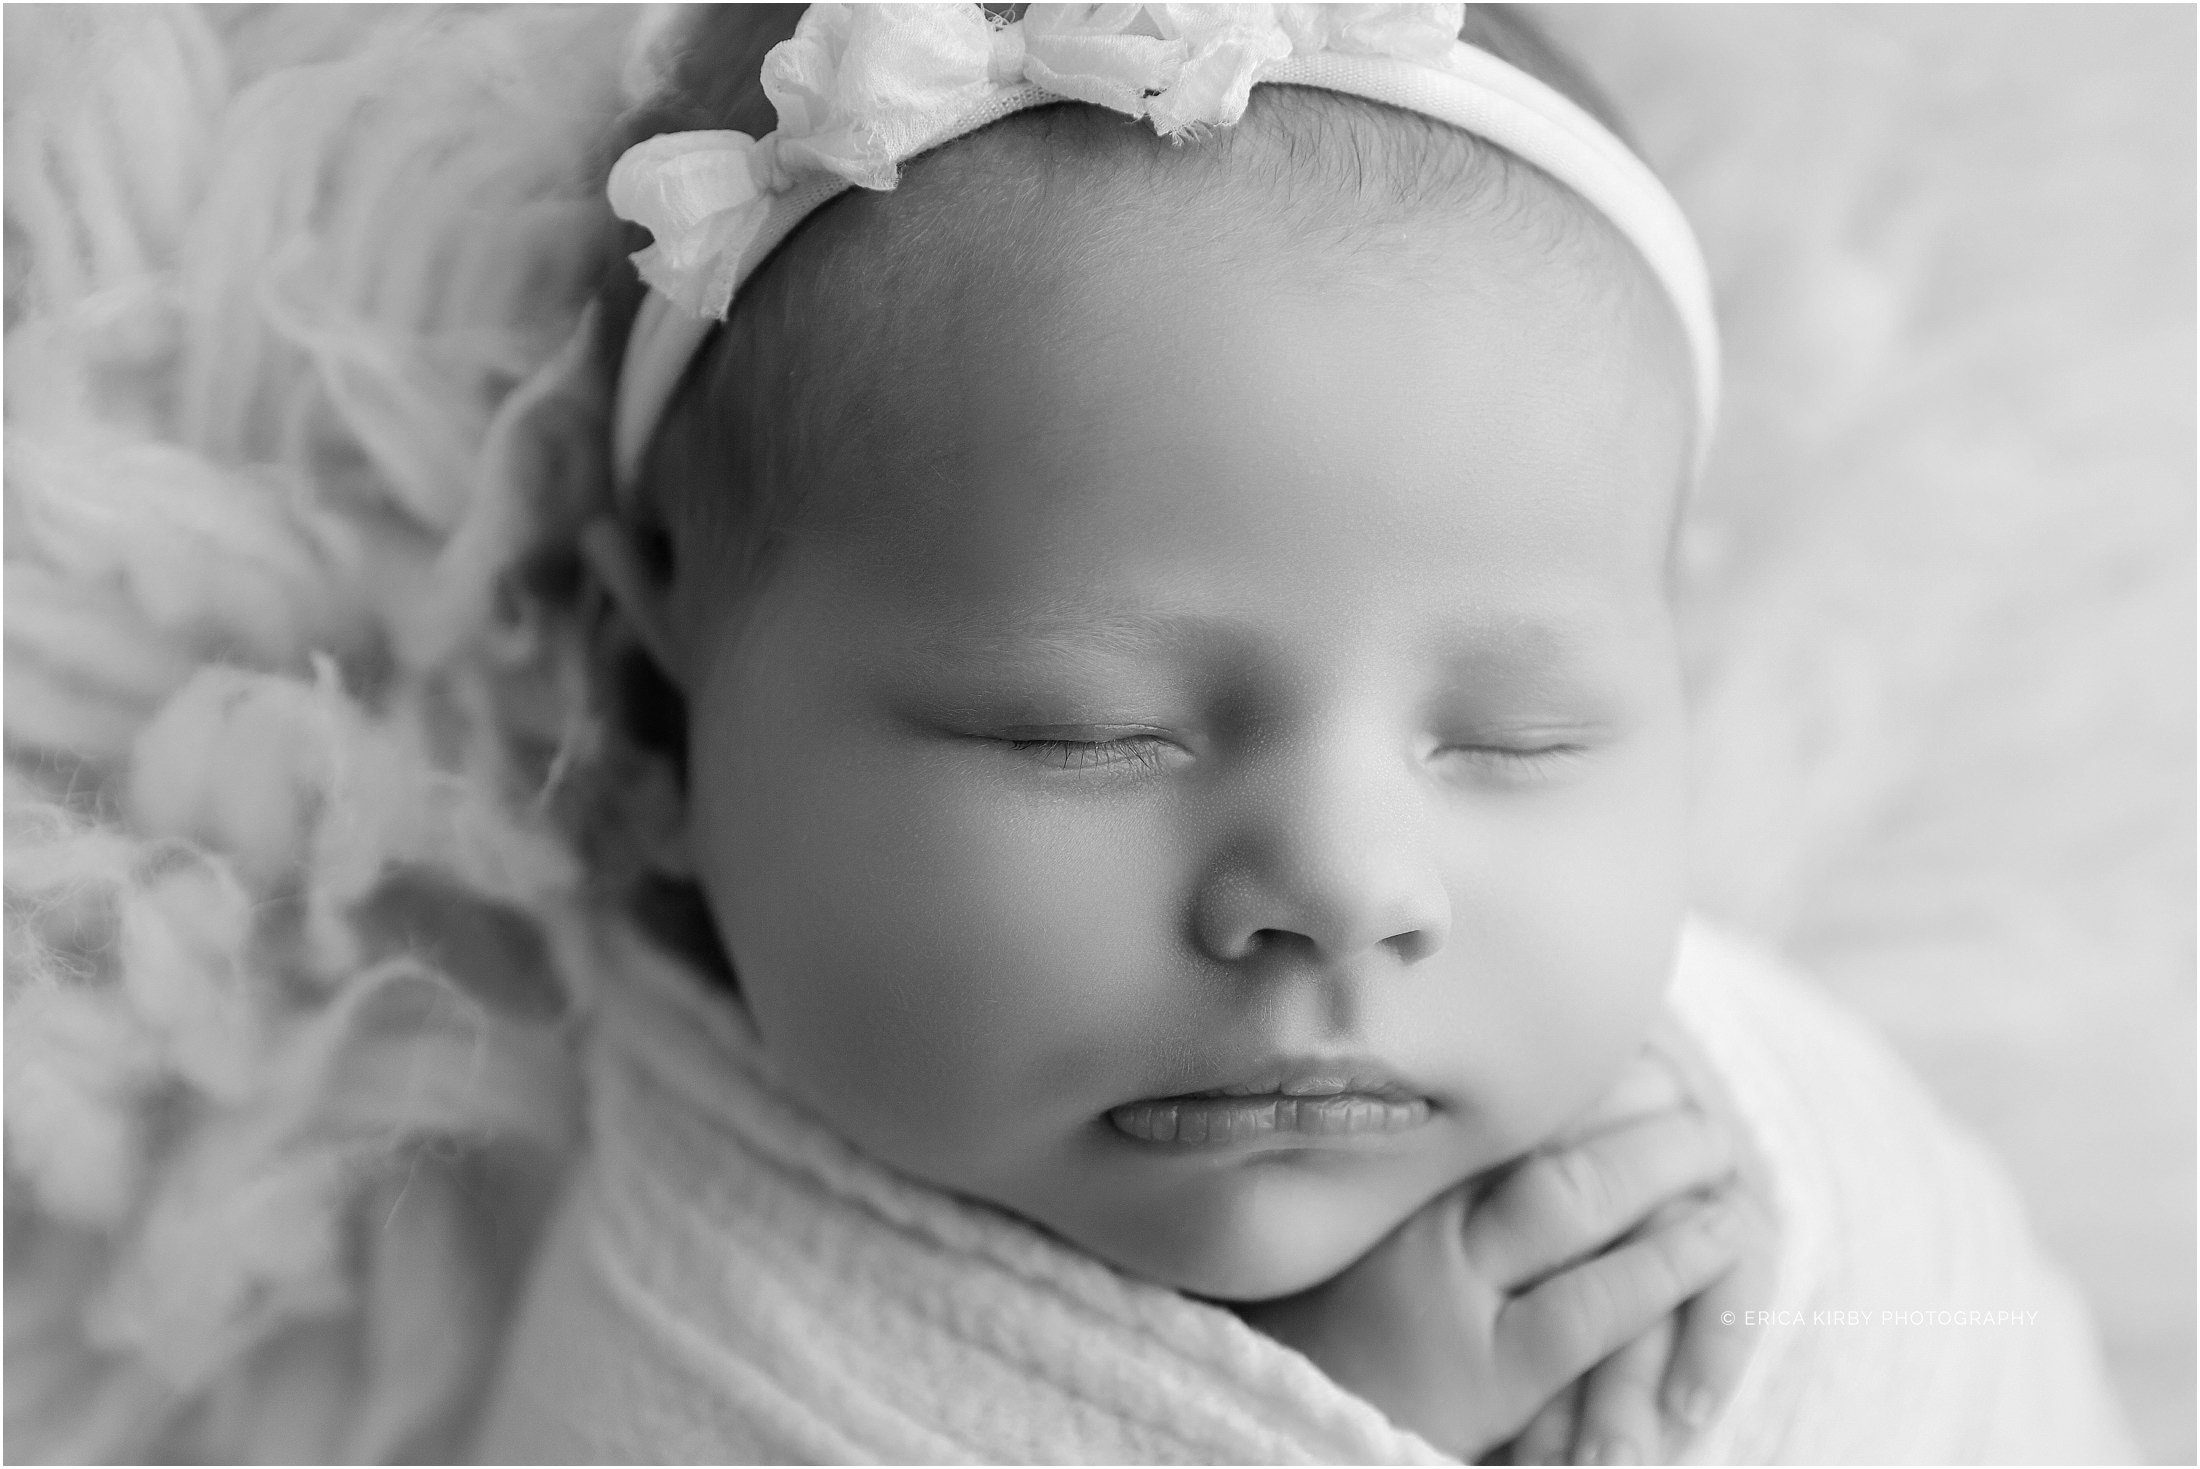 Baby girl newborn photo session in Bentonville Arkansas - Newborn Maternity Birth Photographer Northwest AR - Erica Kirby Photography NWA